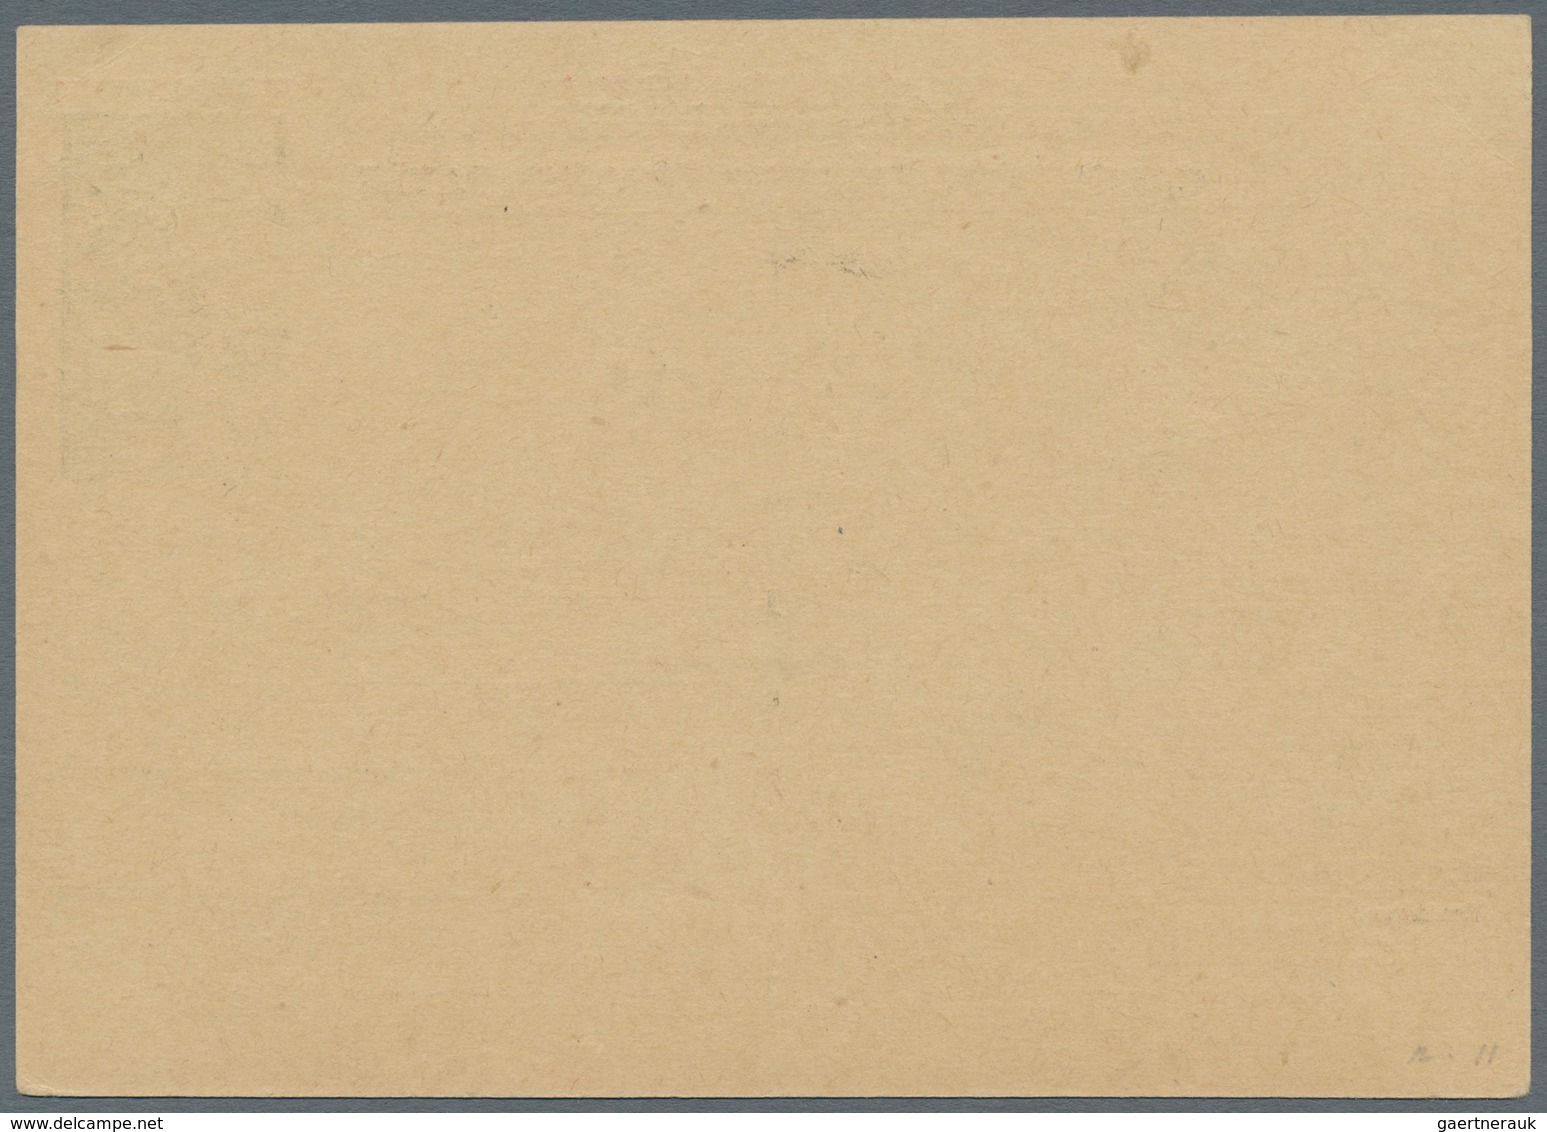 Karpaten-Ukraine: 1945, 1.- On 18 F. Postal Stationery Question Card (new Overprint In Red), Unused, - Ukraine